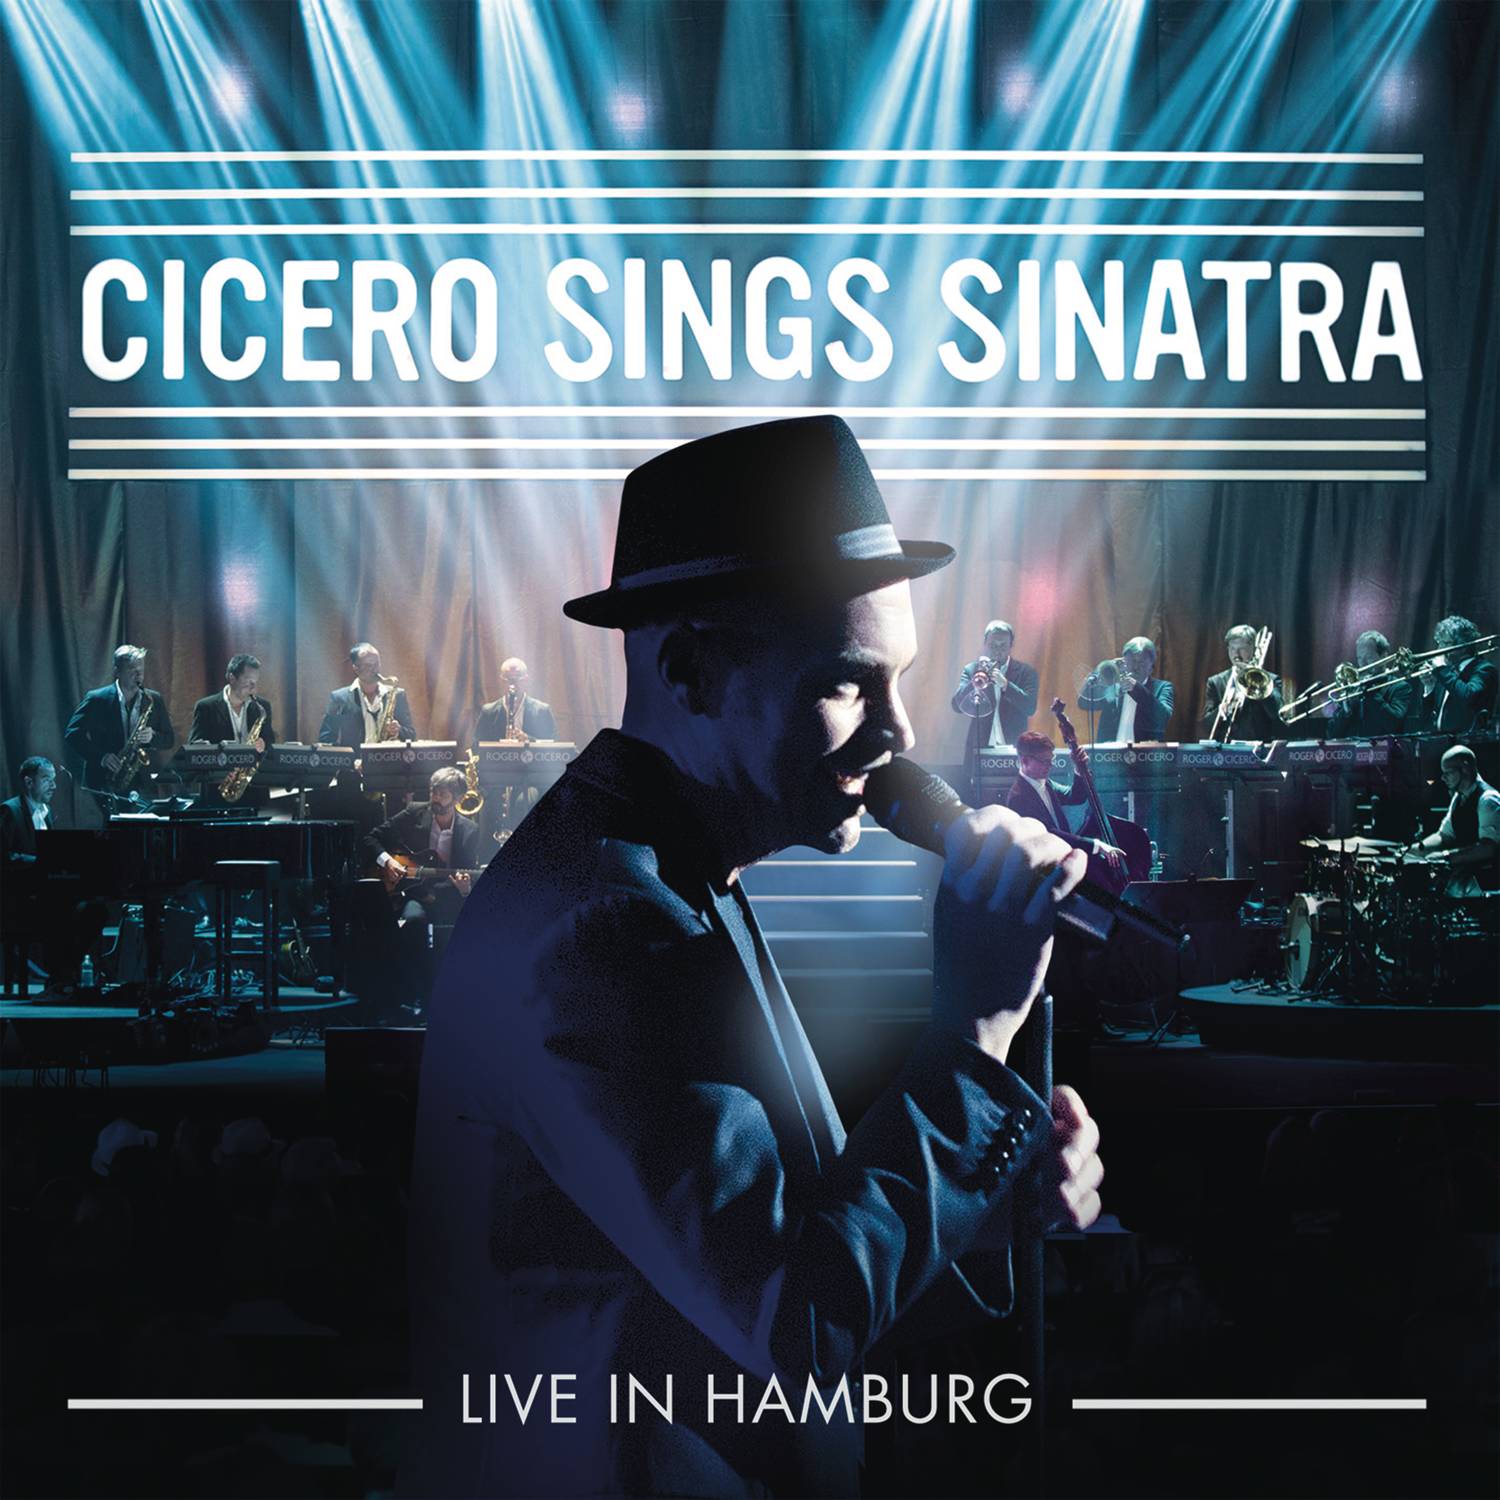 Cicero Sings Sinatra - Live in Hamburg